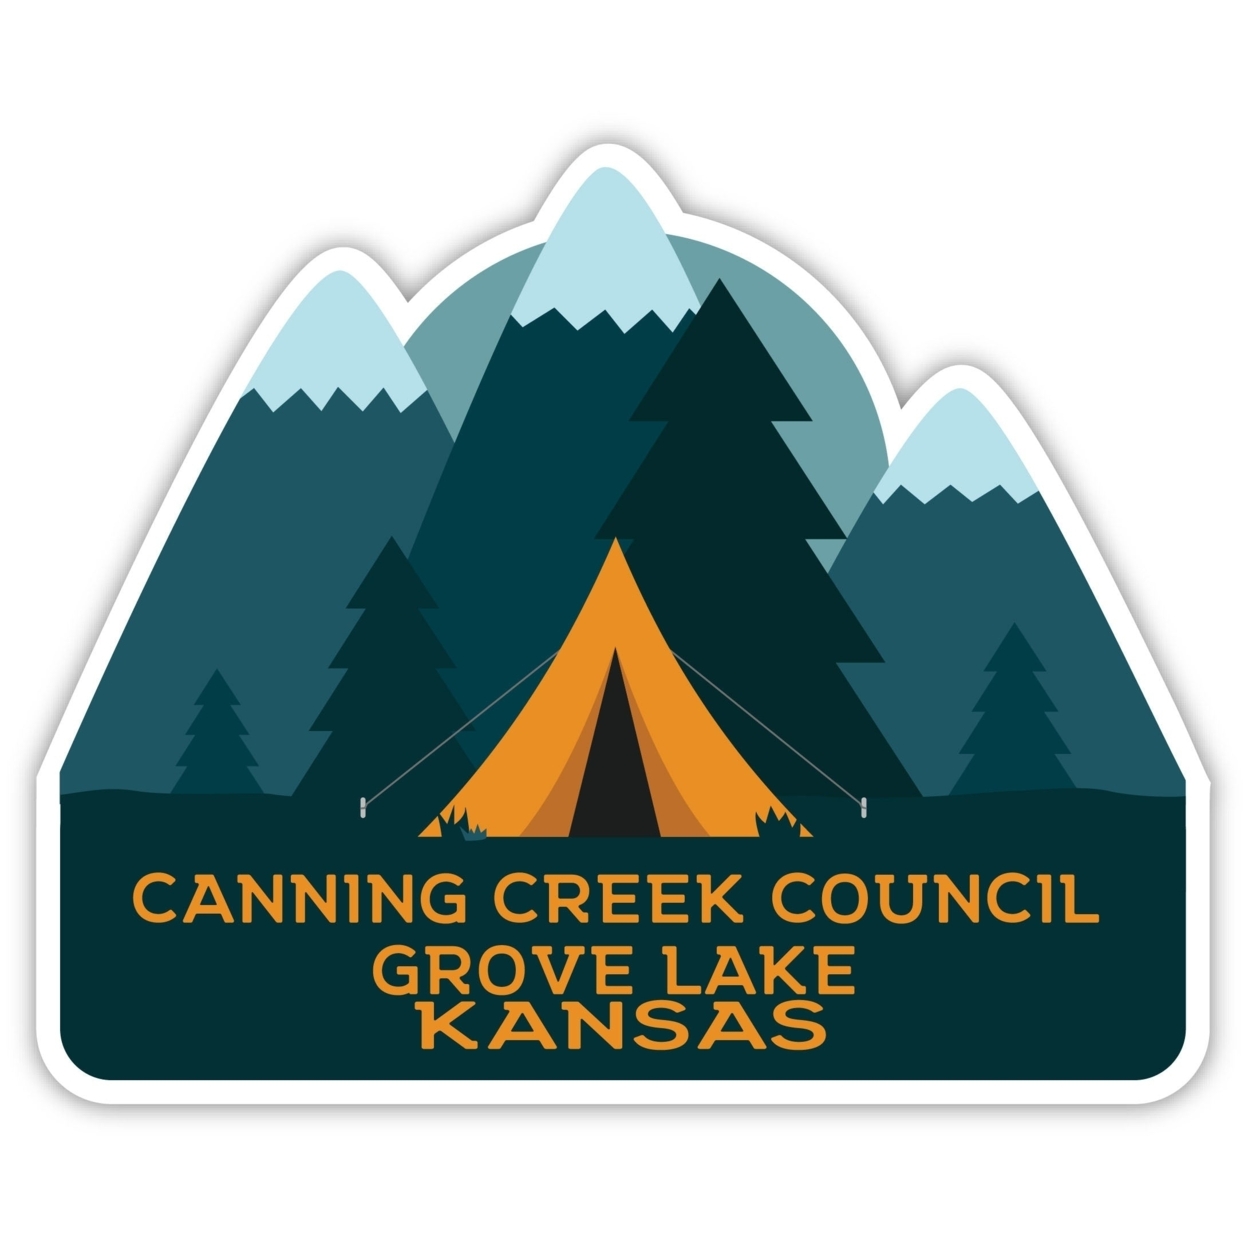 Canning Creek Council Grove Lake Kansas Souvenir Decorative Stickers (Choose Theme And Size) - Single Unit, 4-Inch, Tent